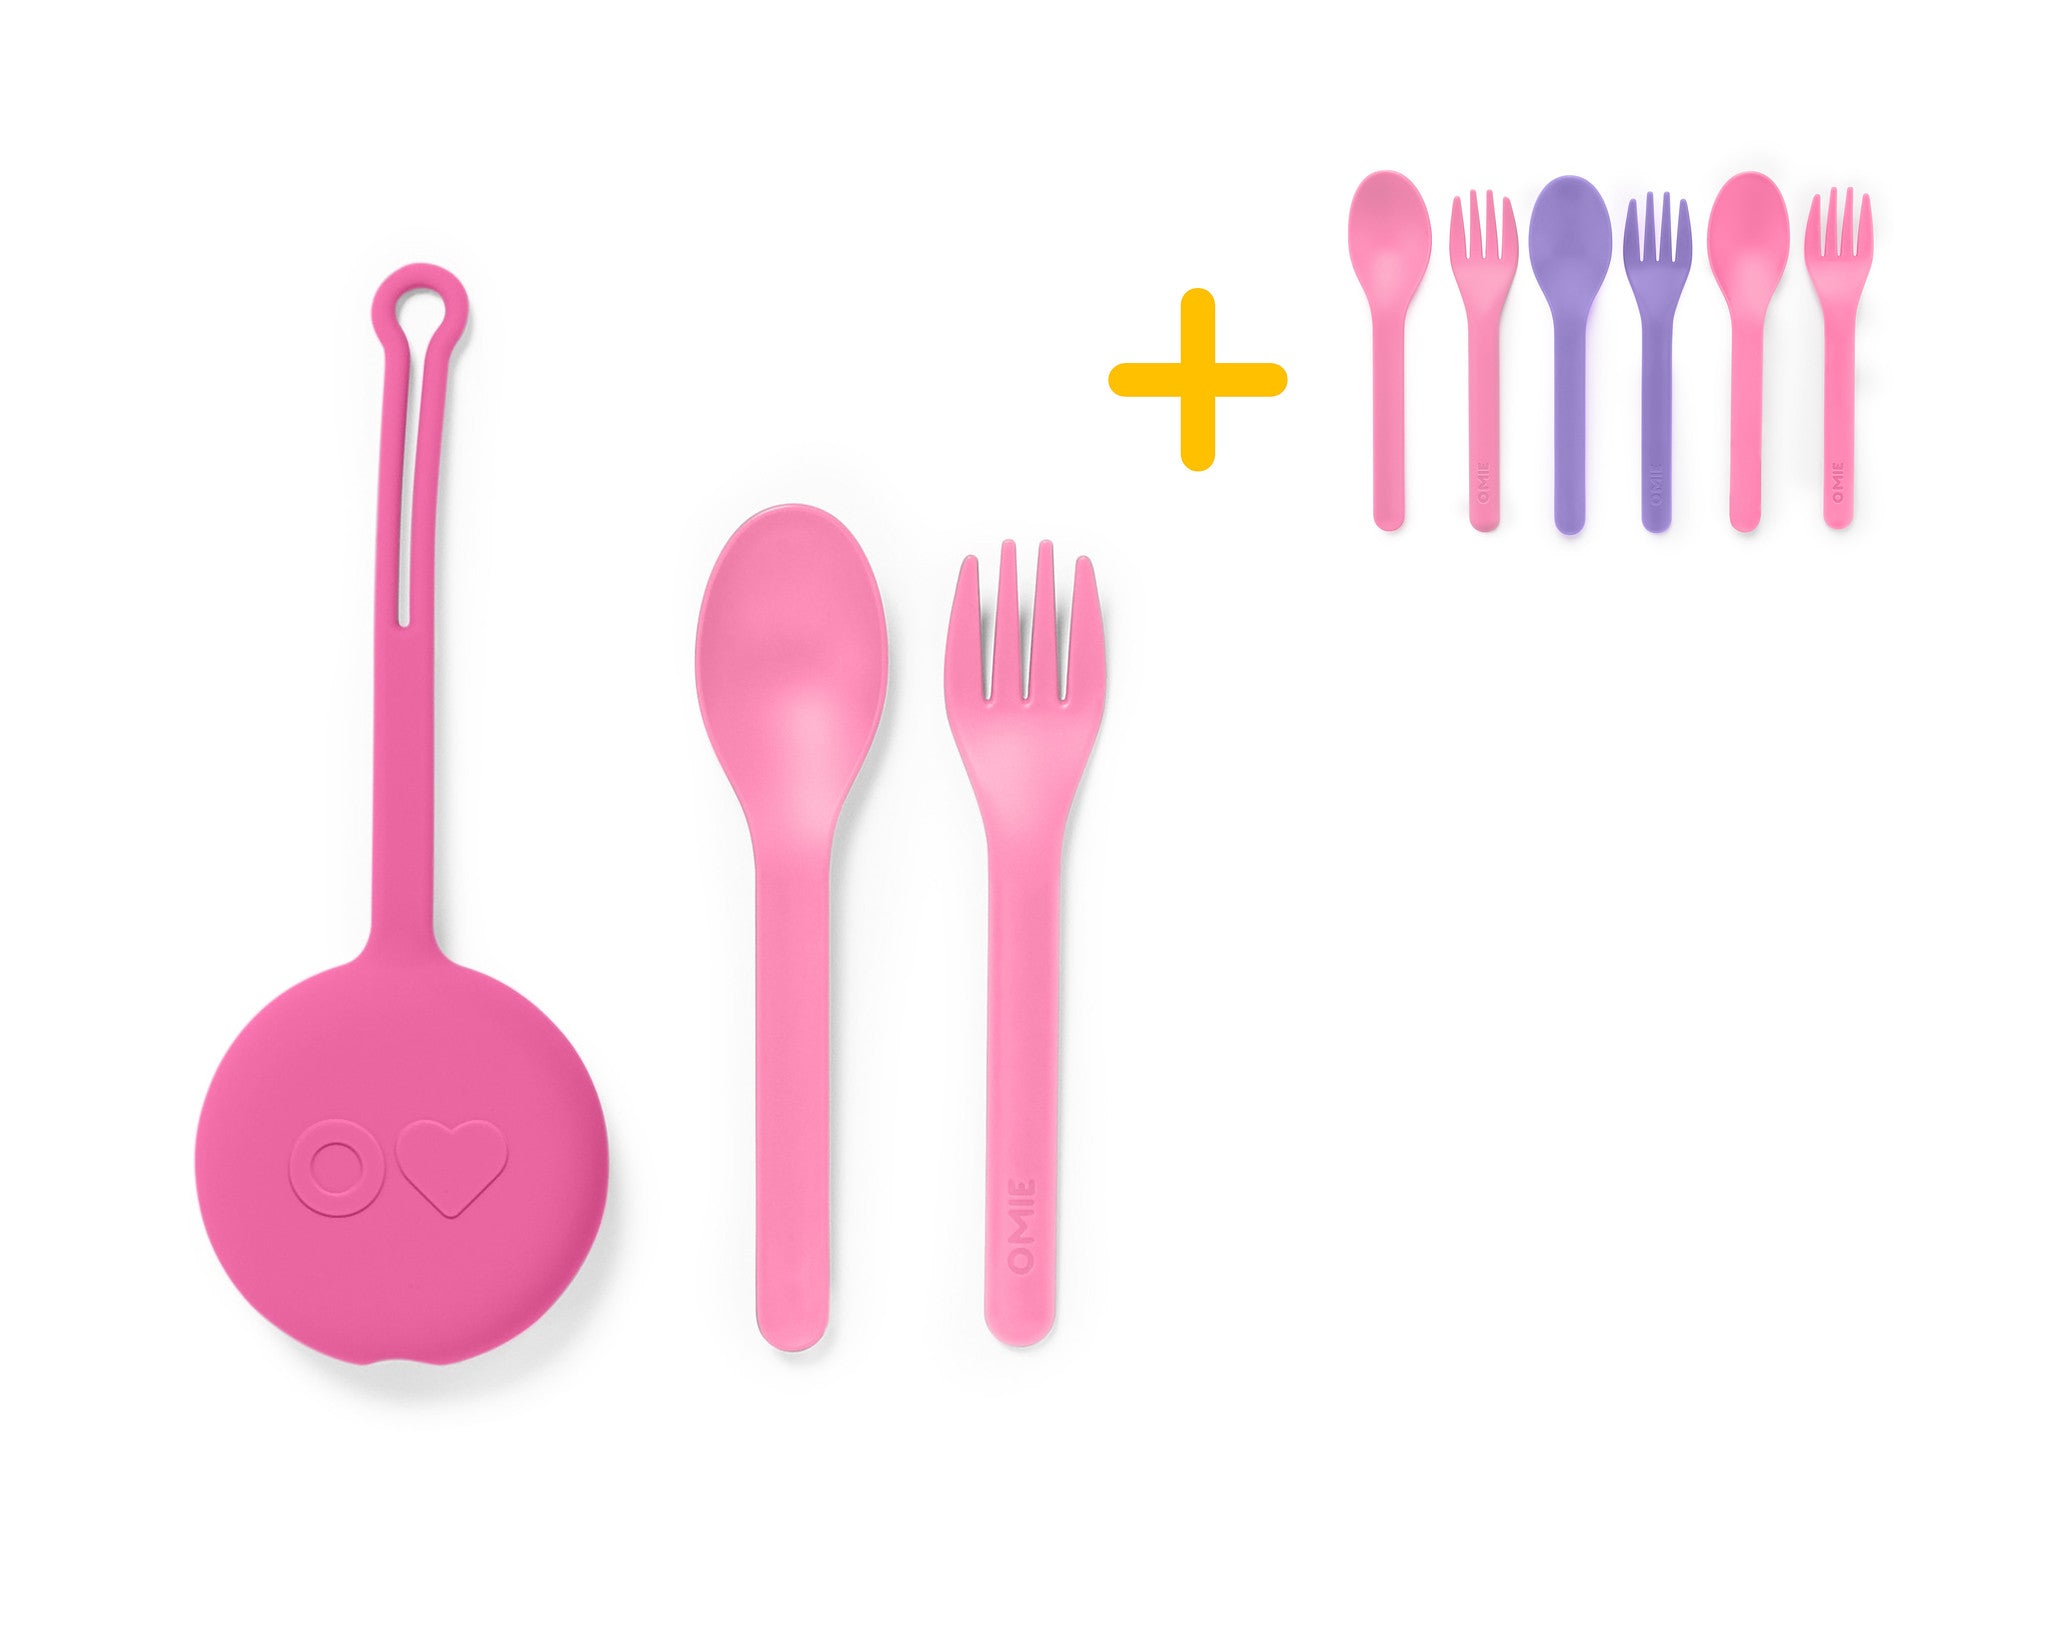 OmieBox - Fork, Spoon & Pod Set - Sunrise